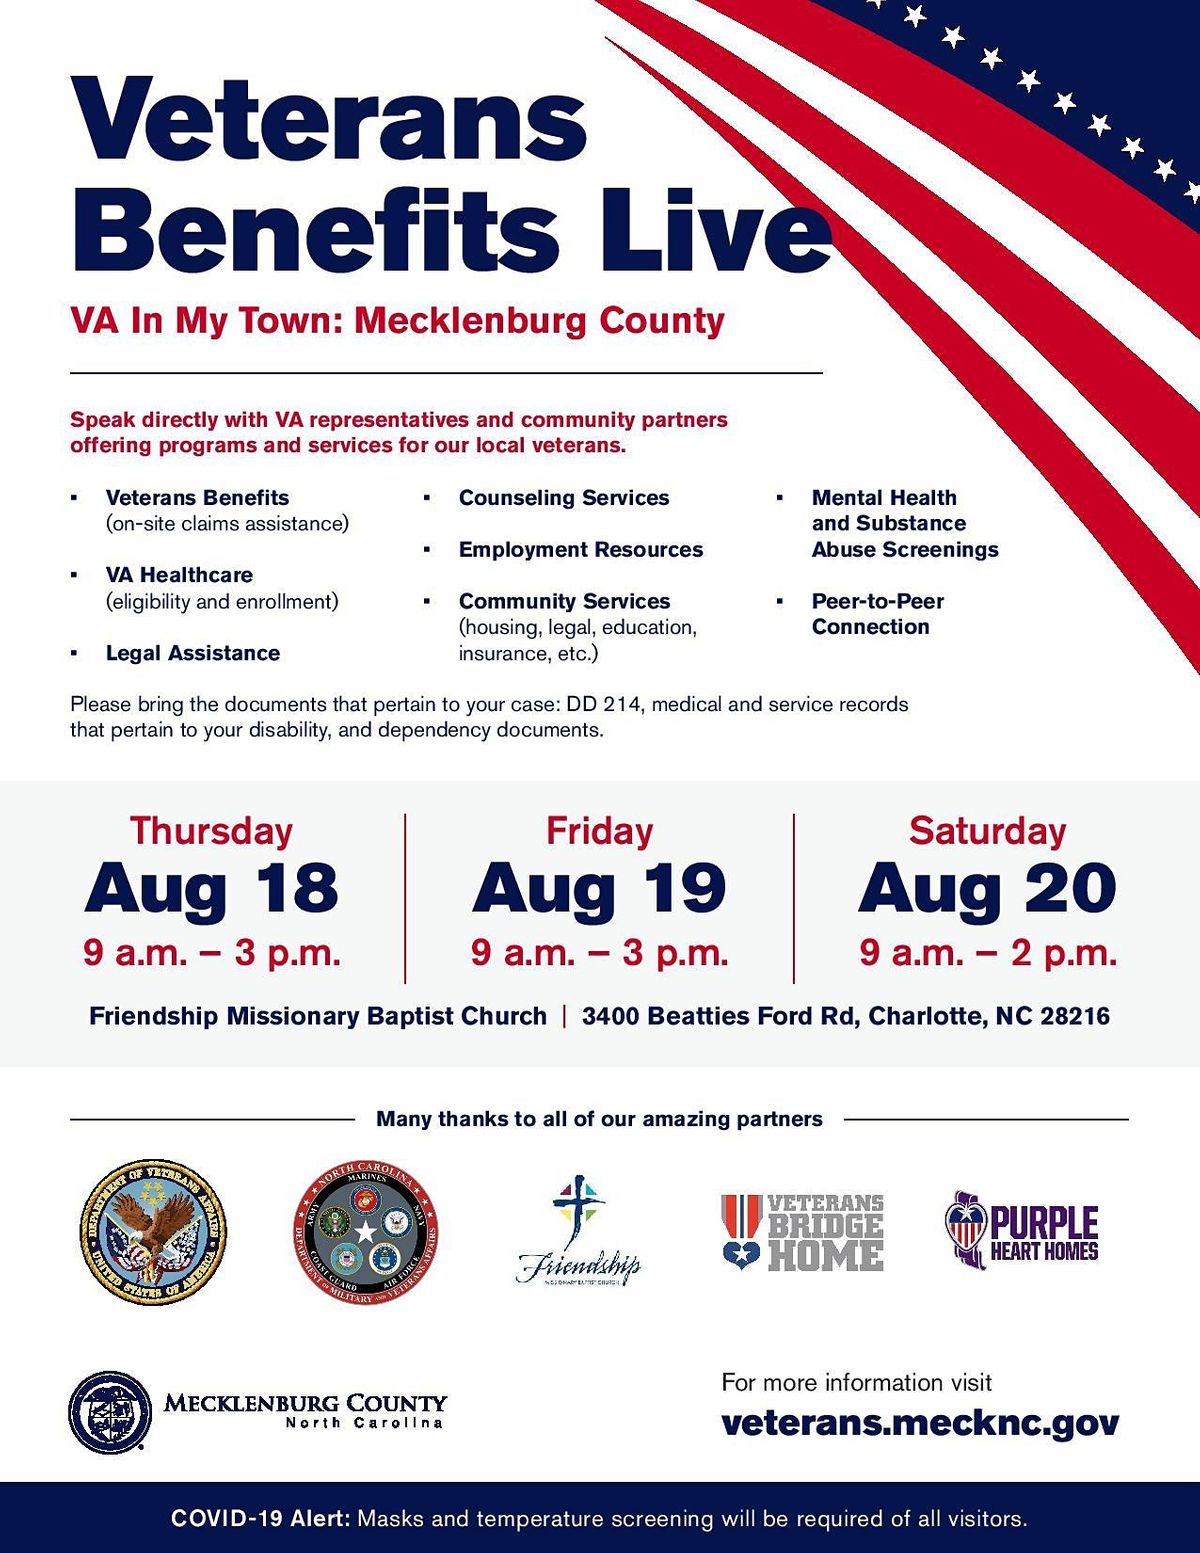 Veterans Benefits Live: VA in My Town: Mecklenburg County